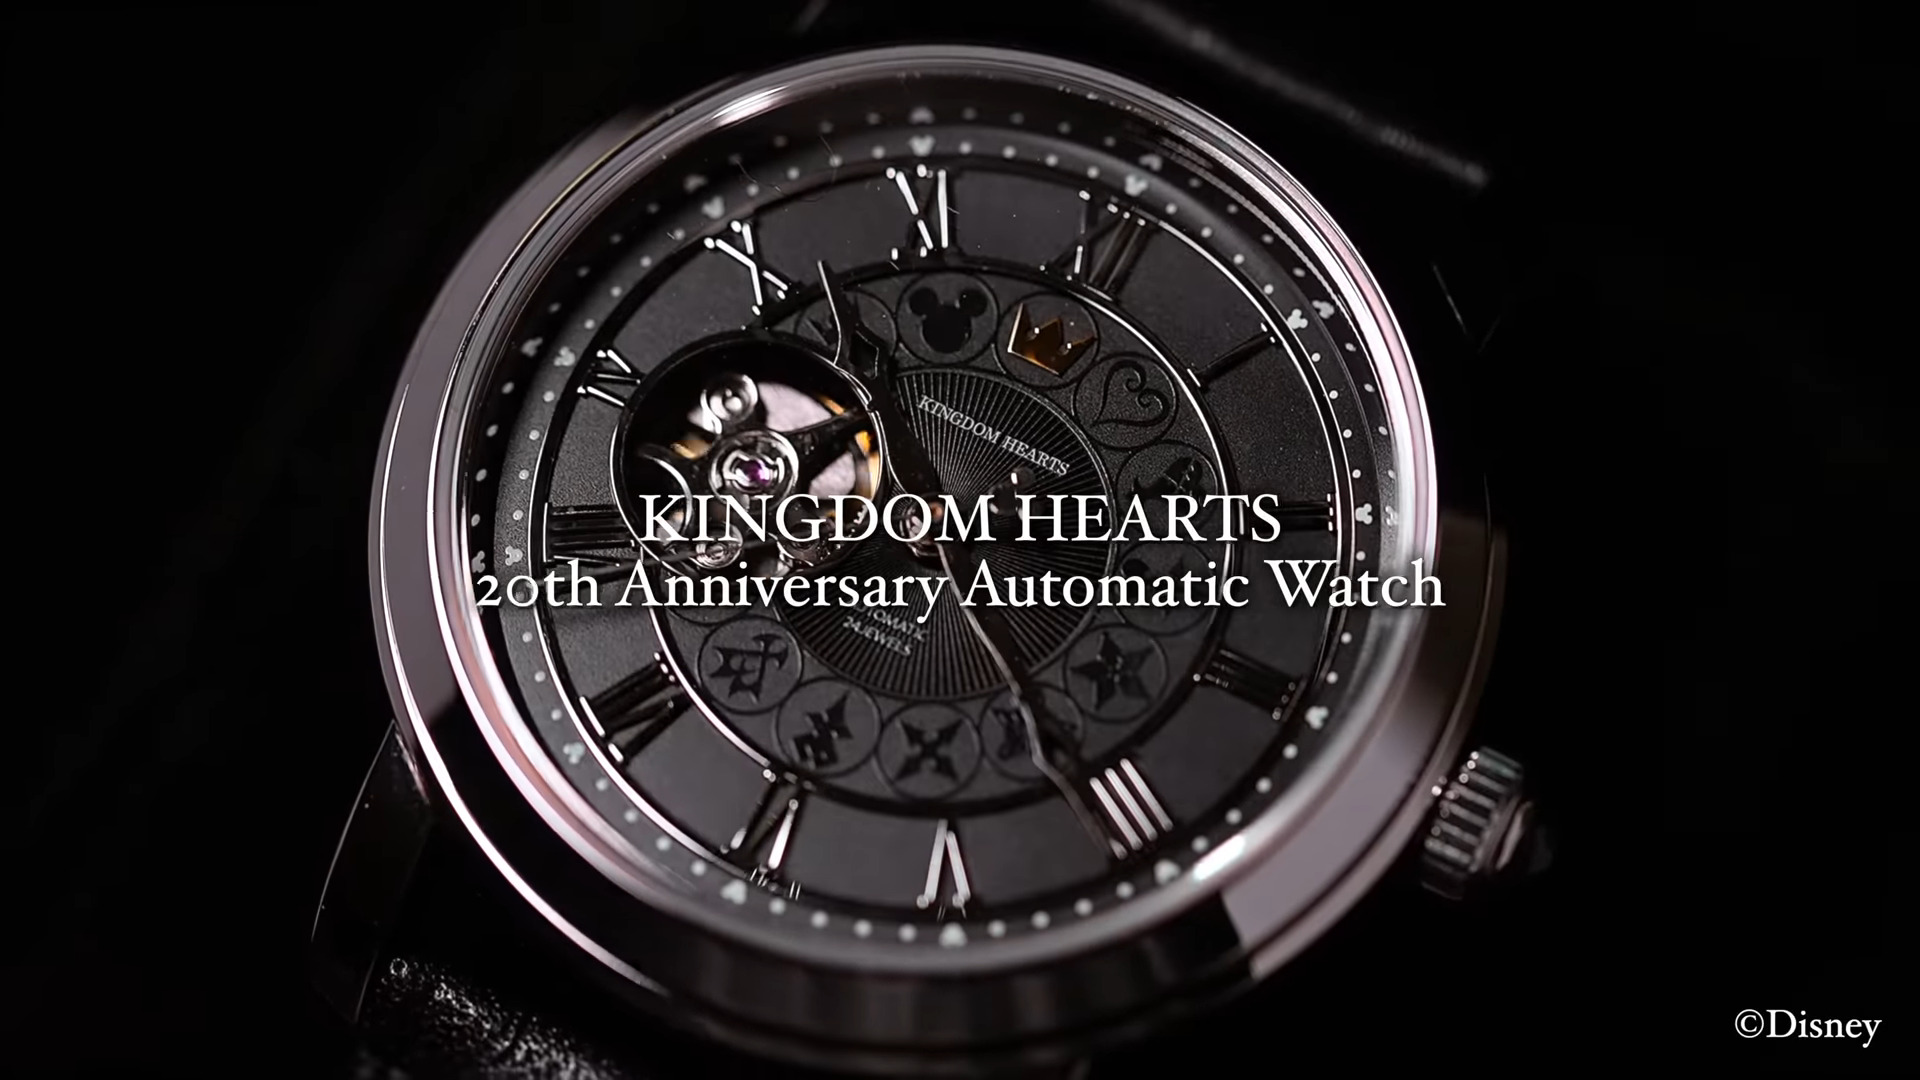 Kingdom Hearts ฉลองครบรอบ 20 ปี ด้วยการเปิดตัวนาฬิกาและแก้วน้ำสุดหรู